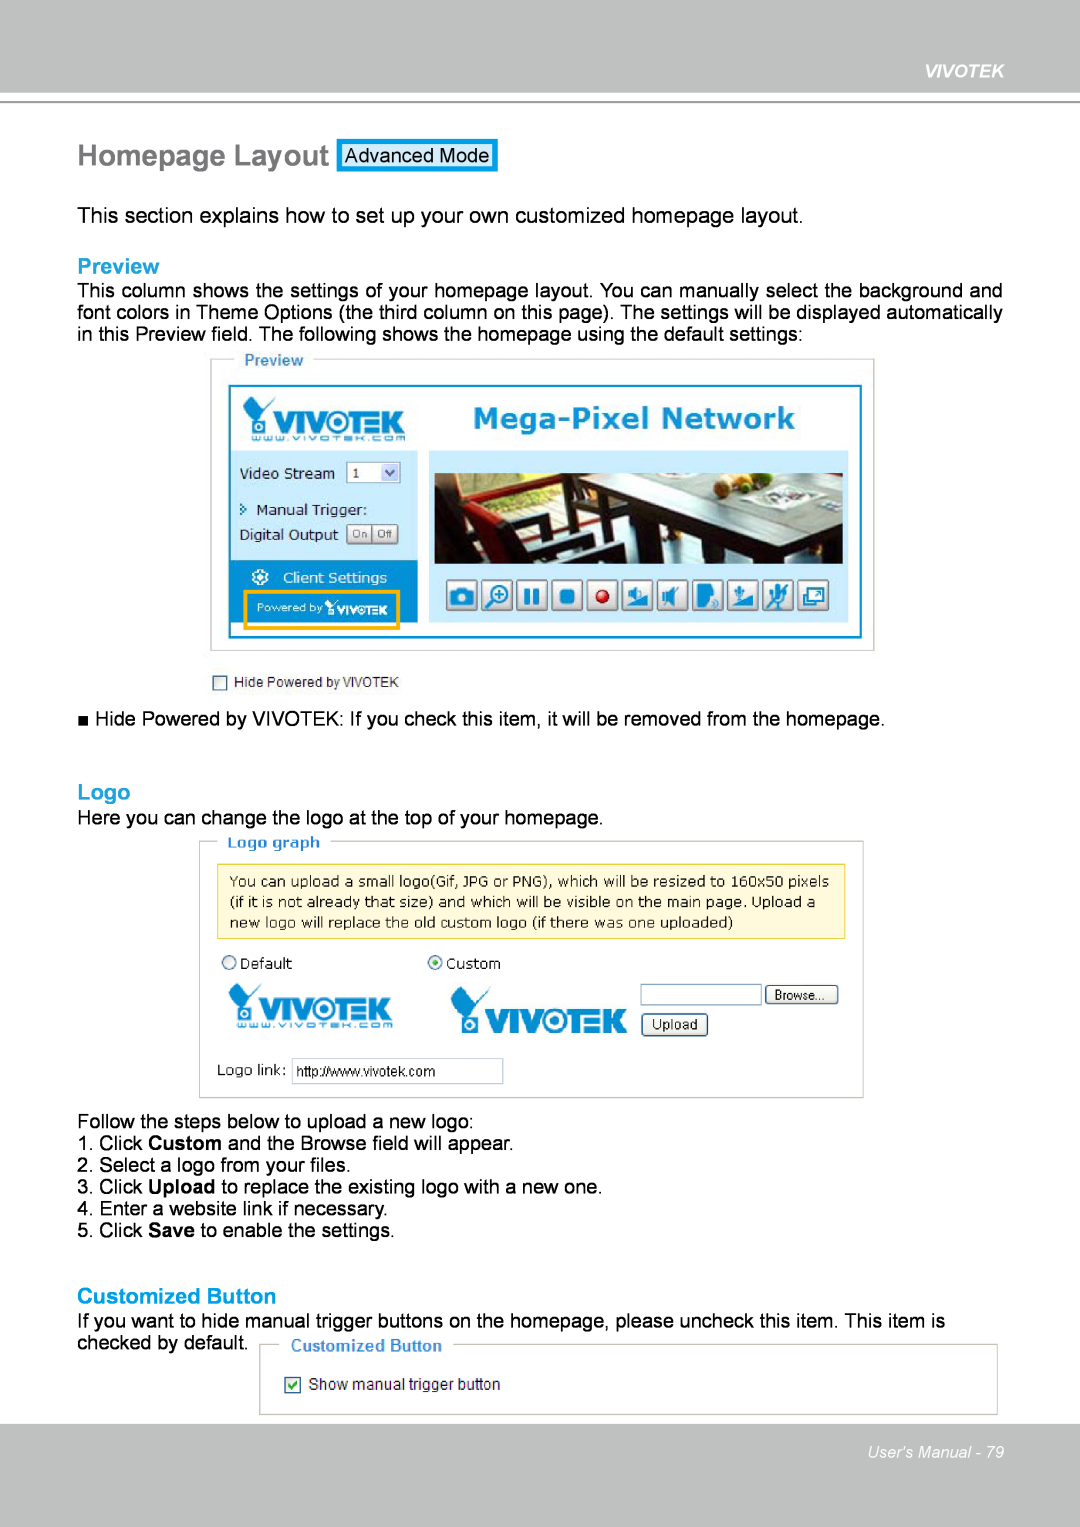 Vivotek IP8151 manual Homepage Layout, Preview, Logo, Customized Button 